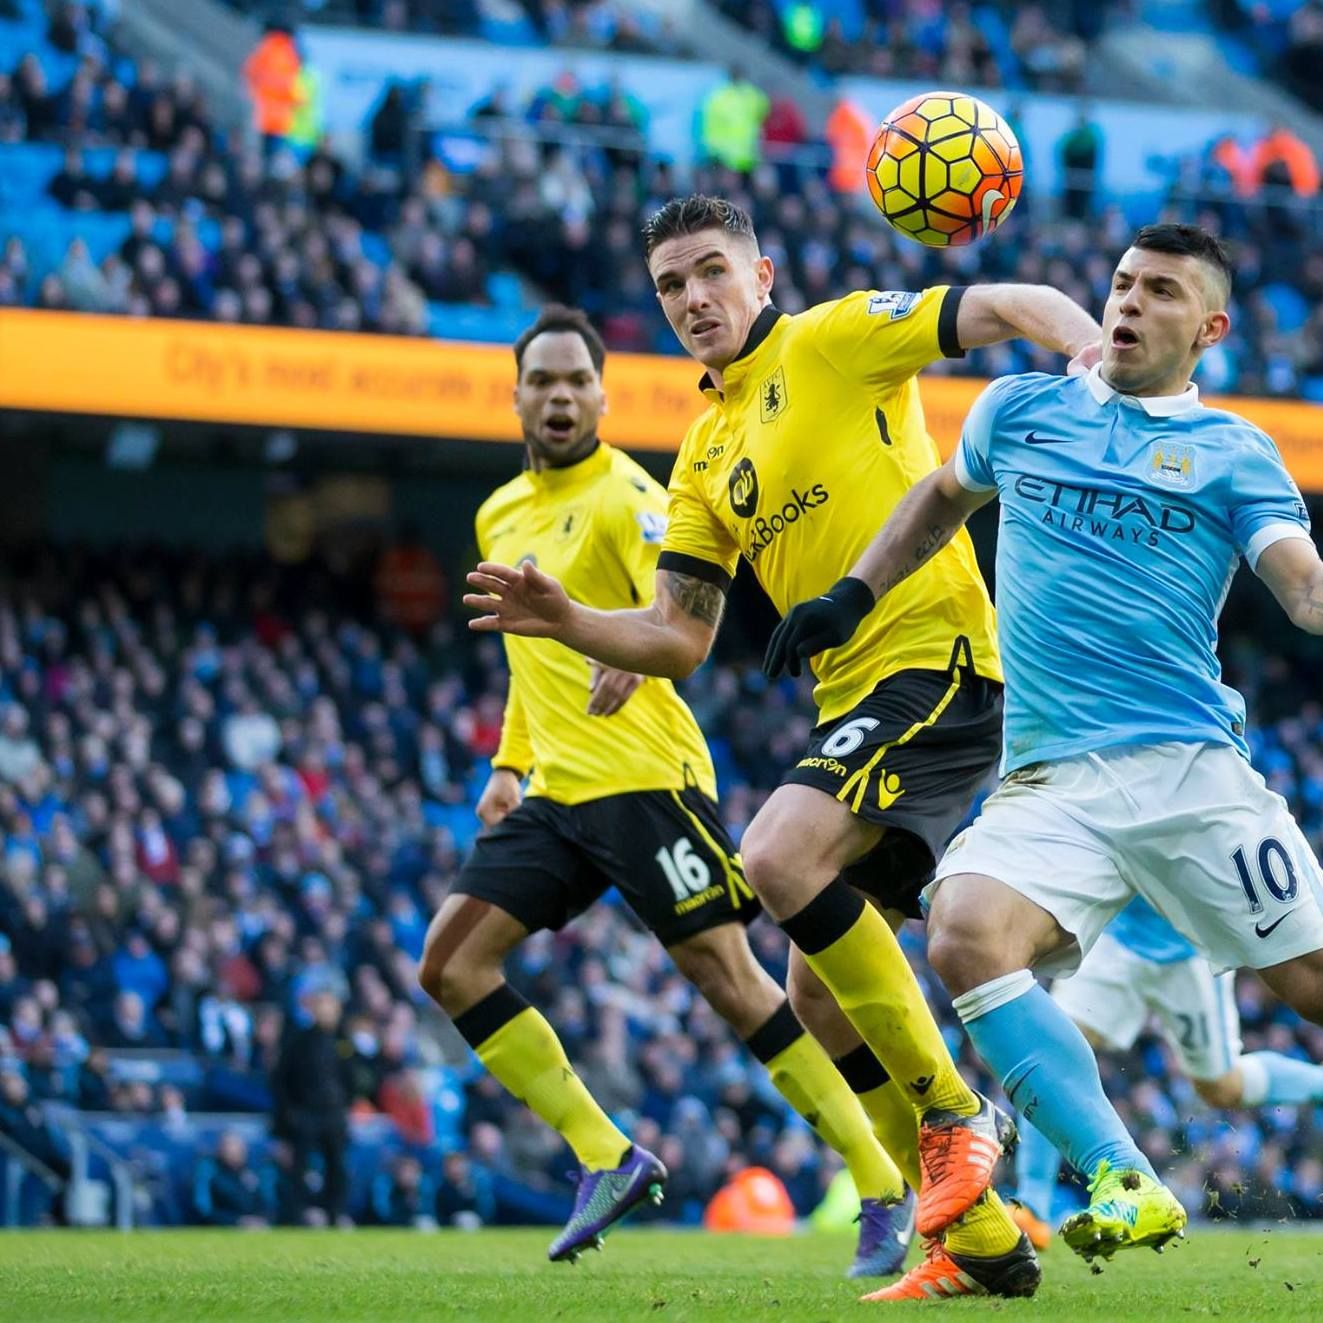 Dynamo opponent defeats Aston Villa easily